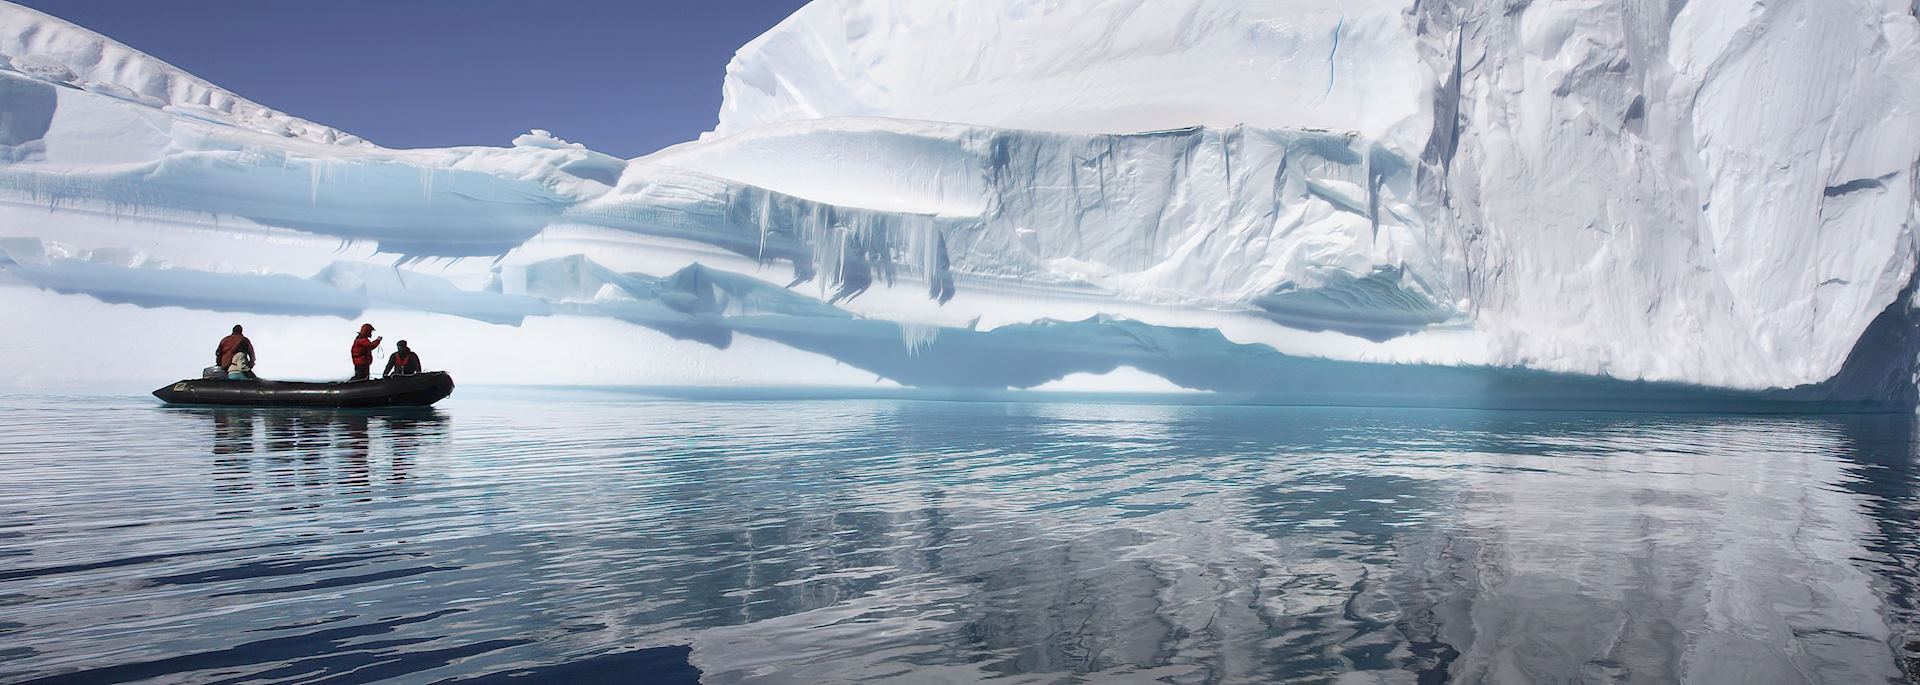 A zodiac excursion in Antarctica